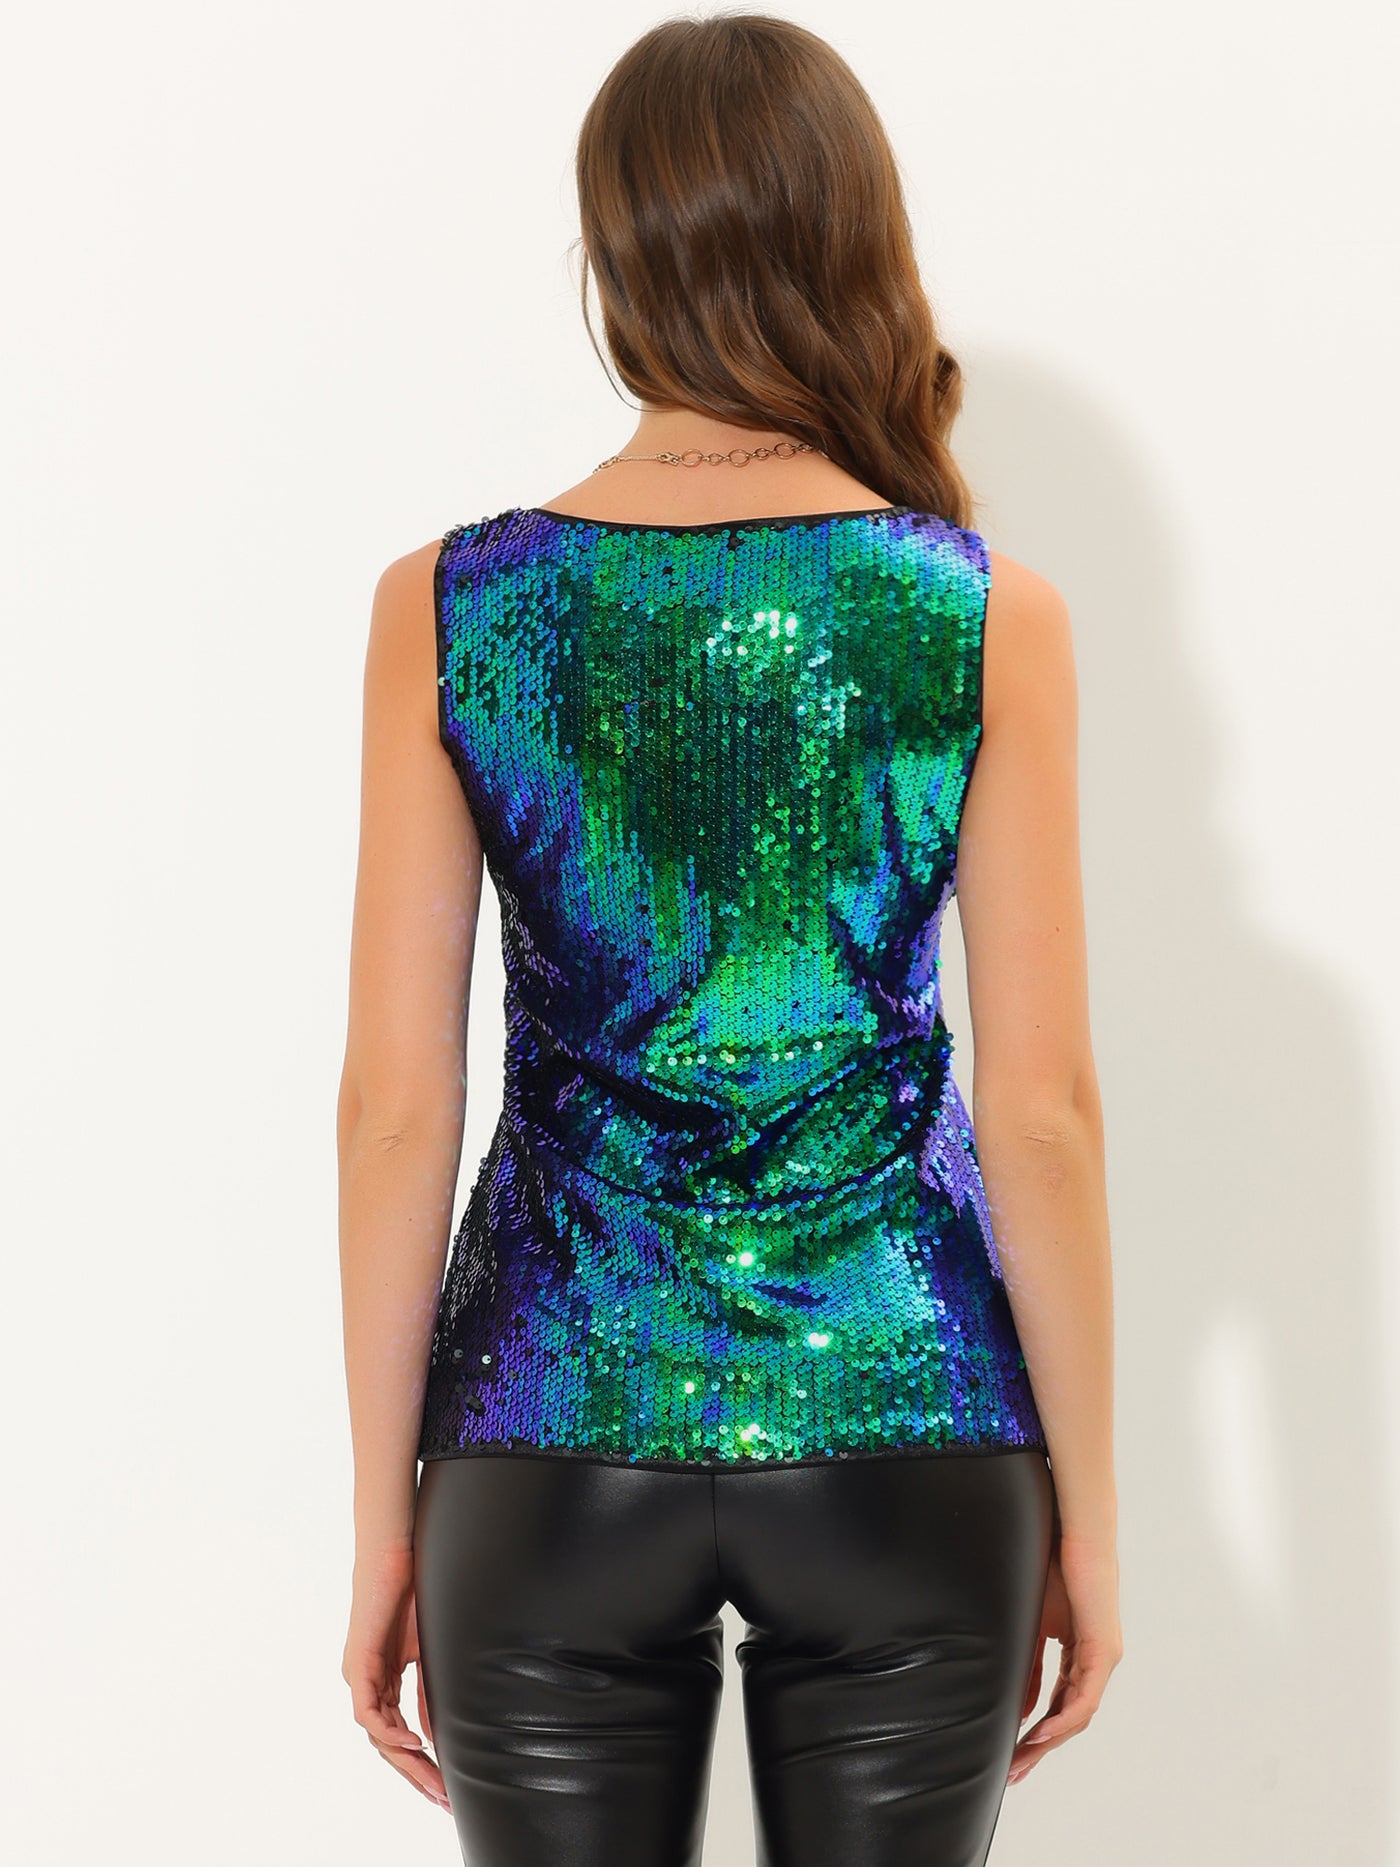 Allegra K Halloween Sequin Tank Top for Sparkle Camisole Glitter Party Vest